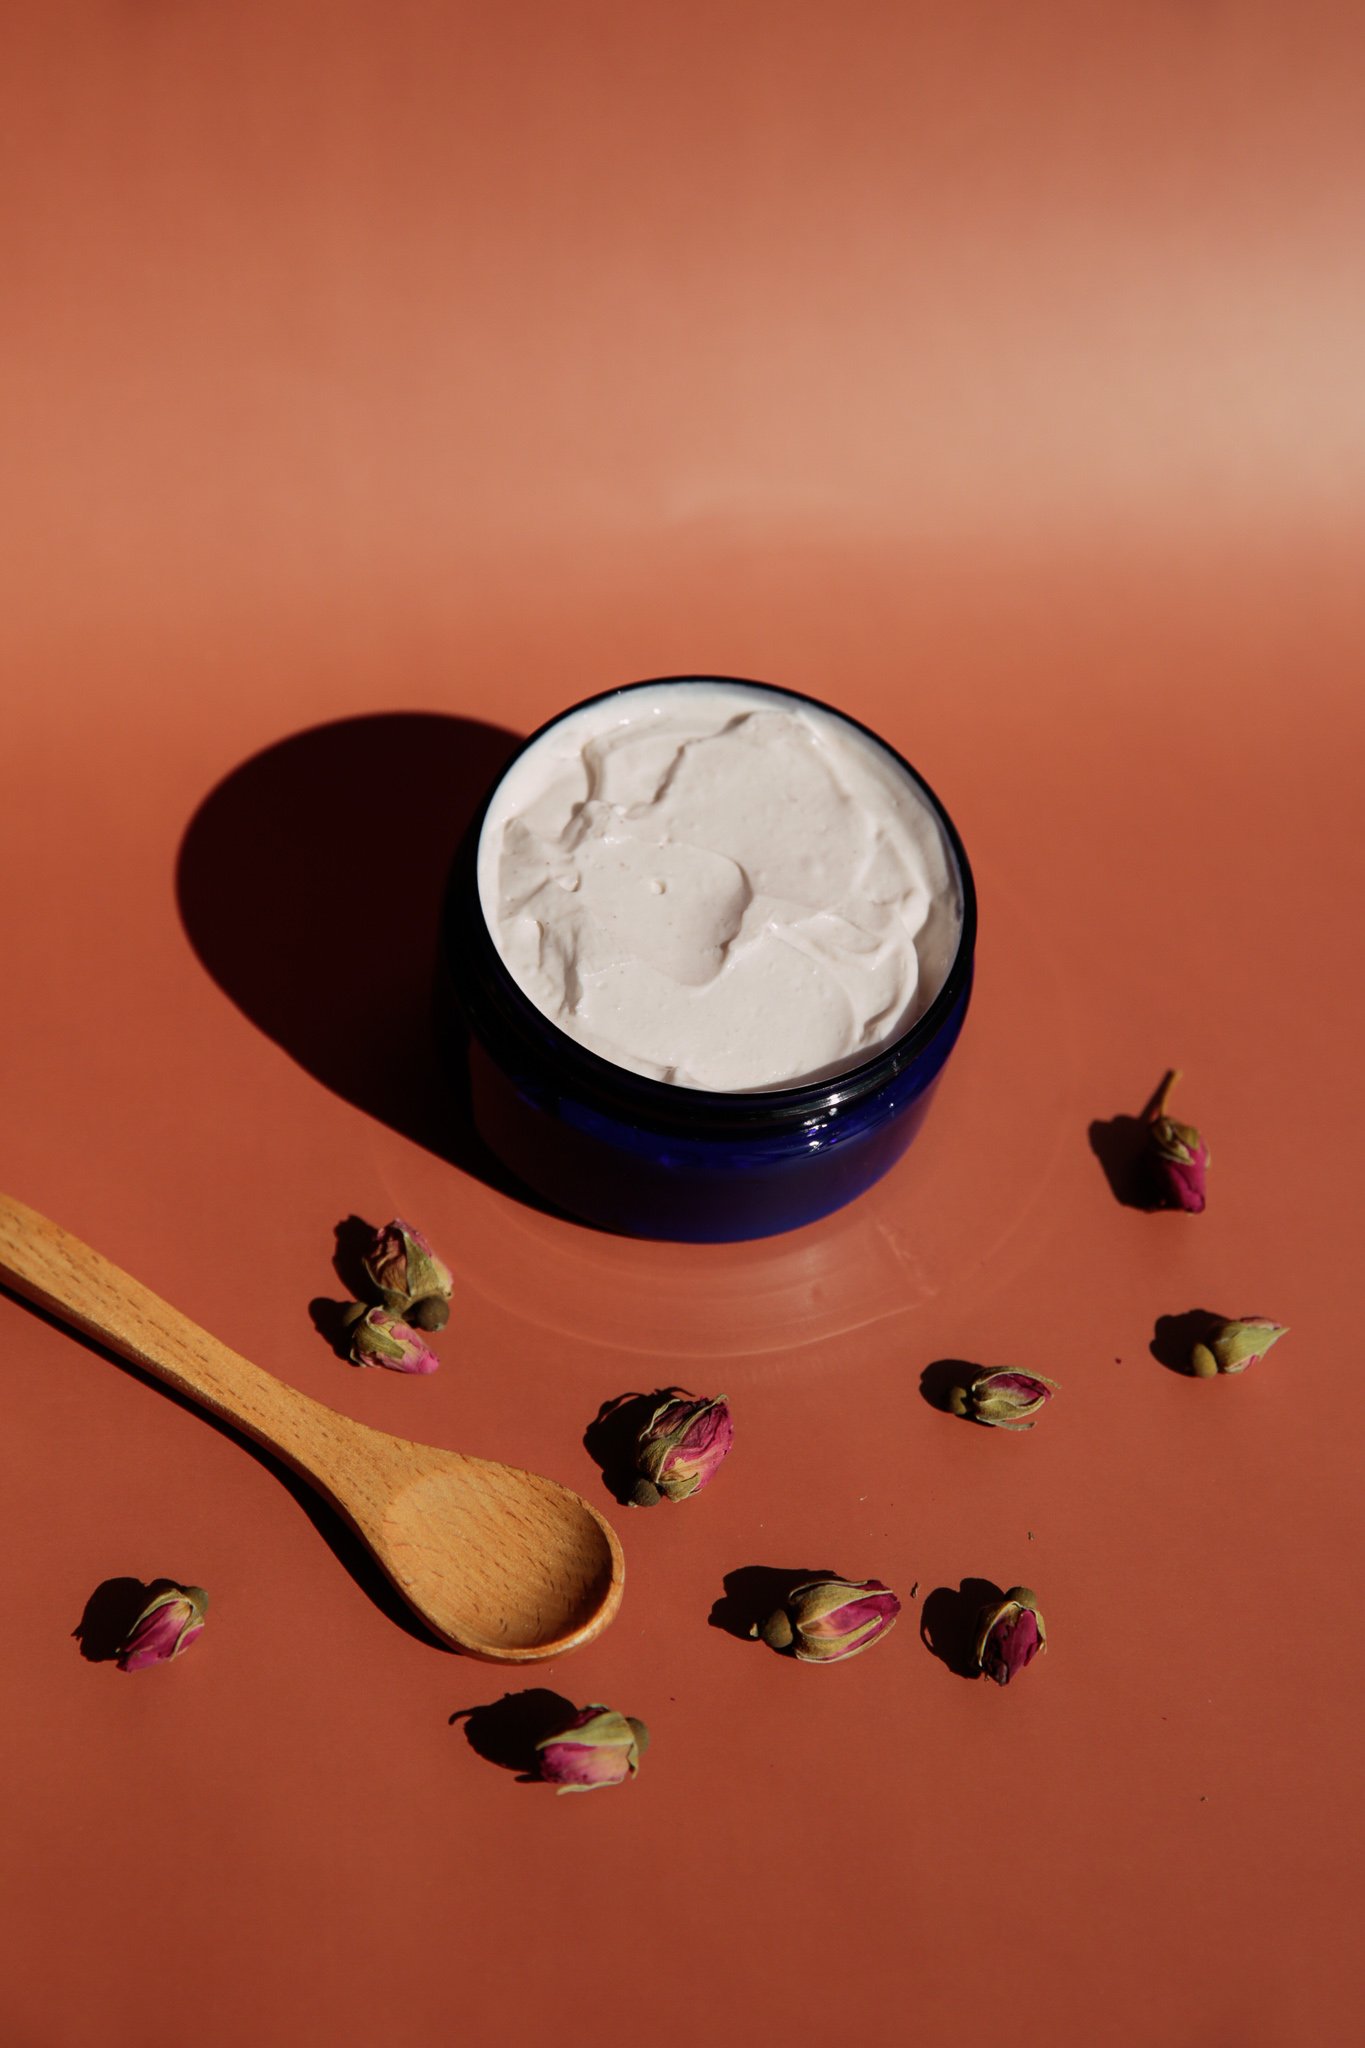 Rosita Body Cream (Fall 2022)